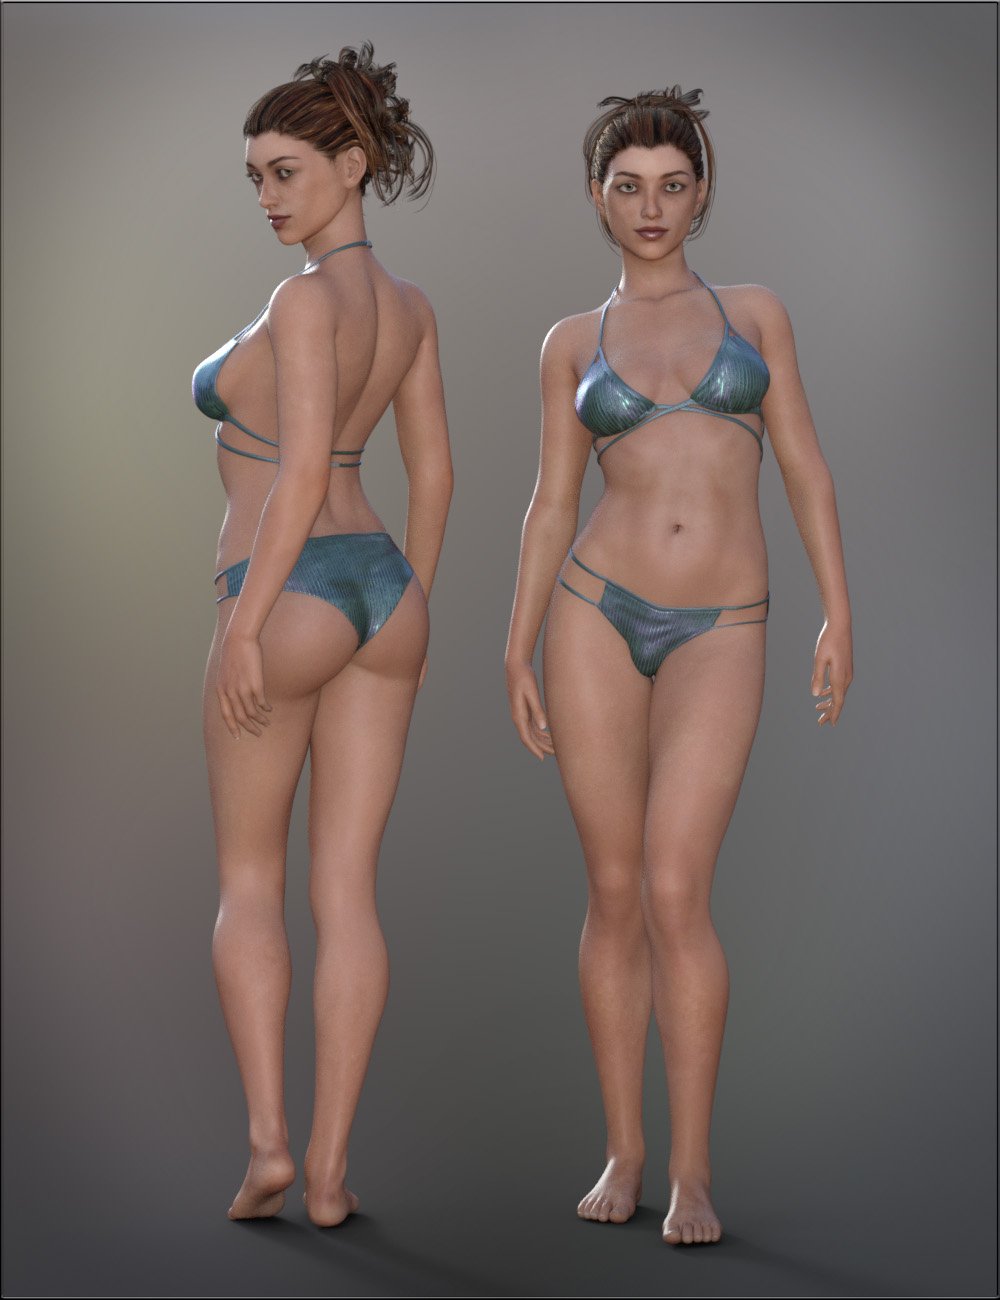 VYK Ruby for Genesis 8 Female by: vyktohria, 3D Models by Daz 3D